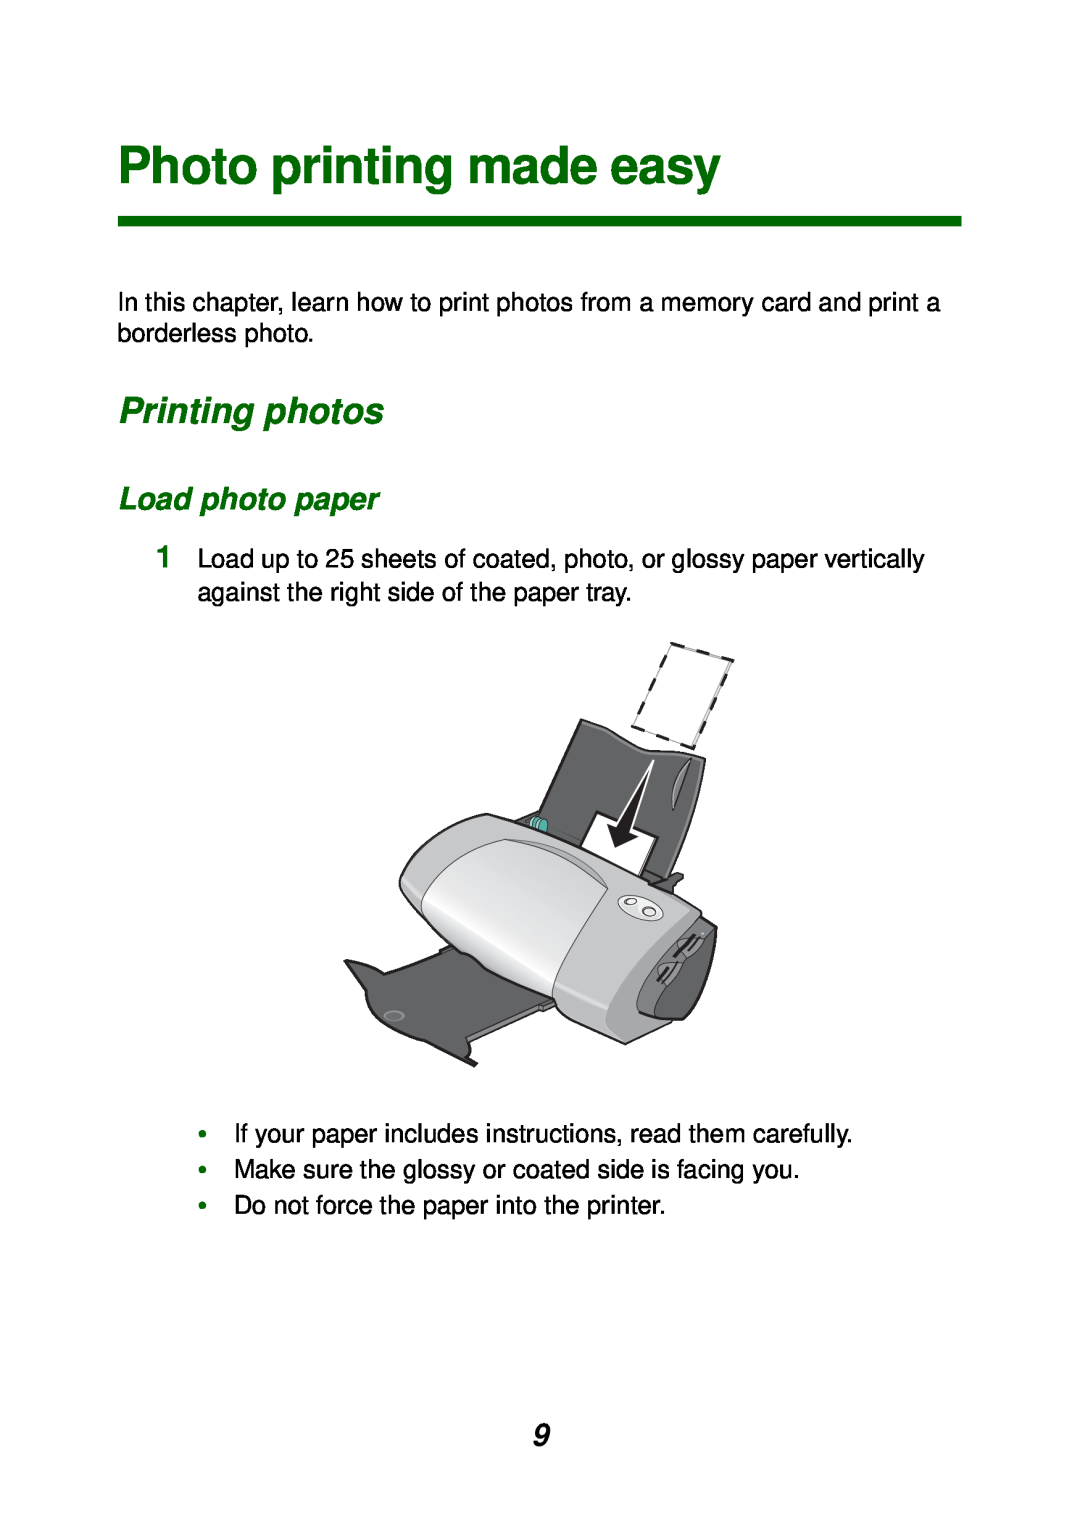 Lexmark P700 manual Photo printing made easy, Load photo paper, Printing photos 